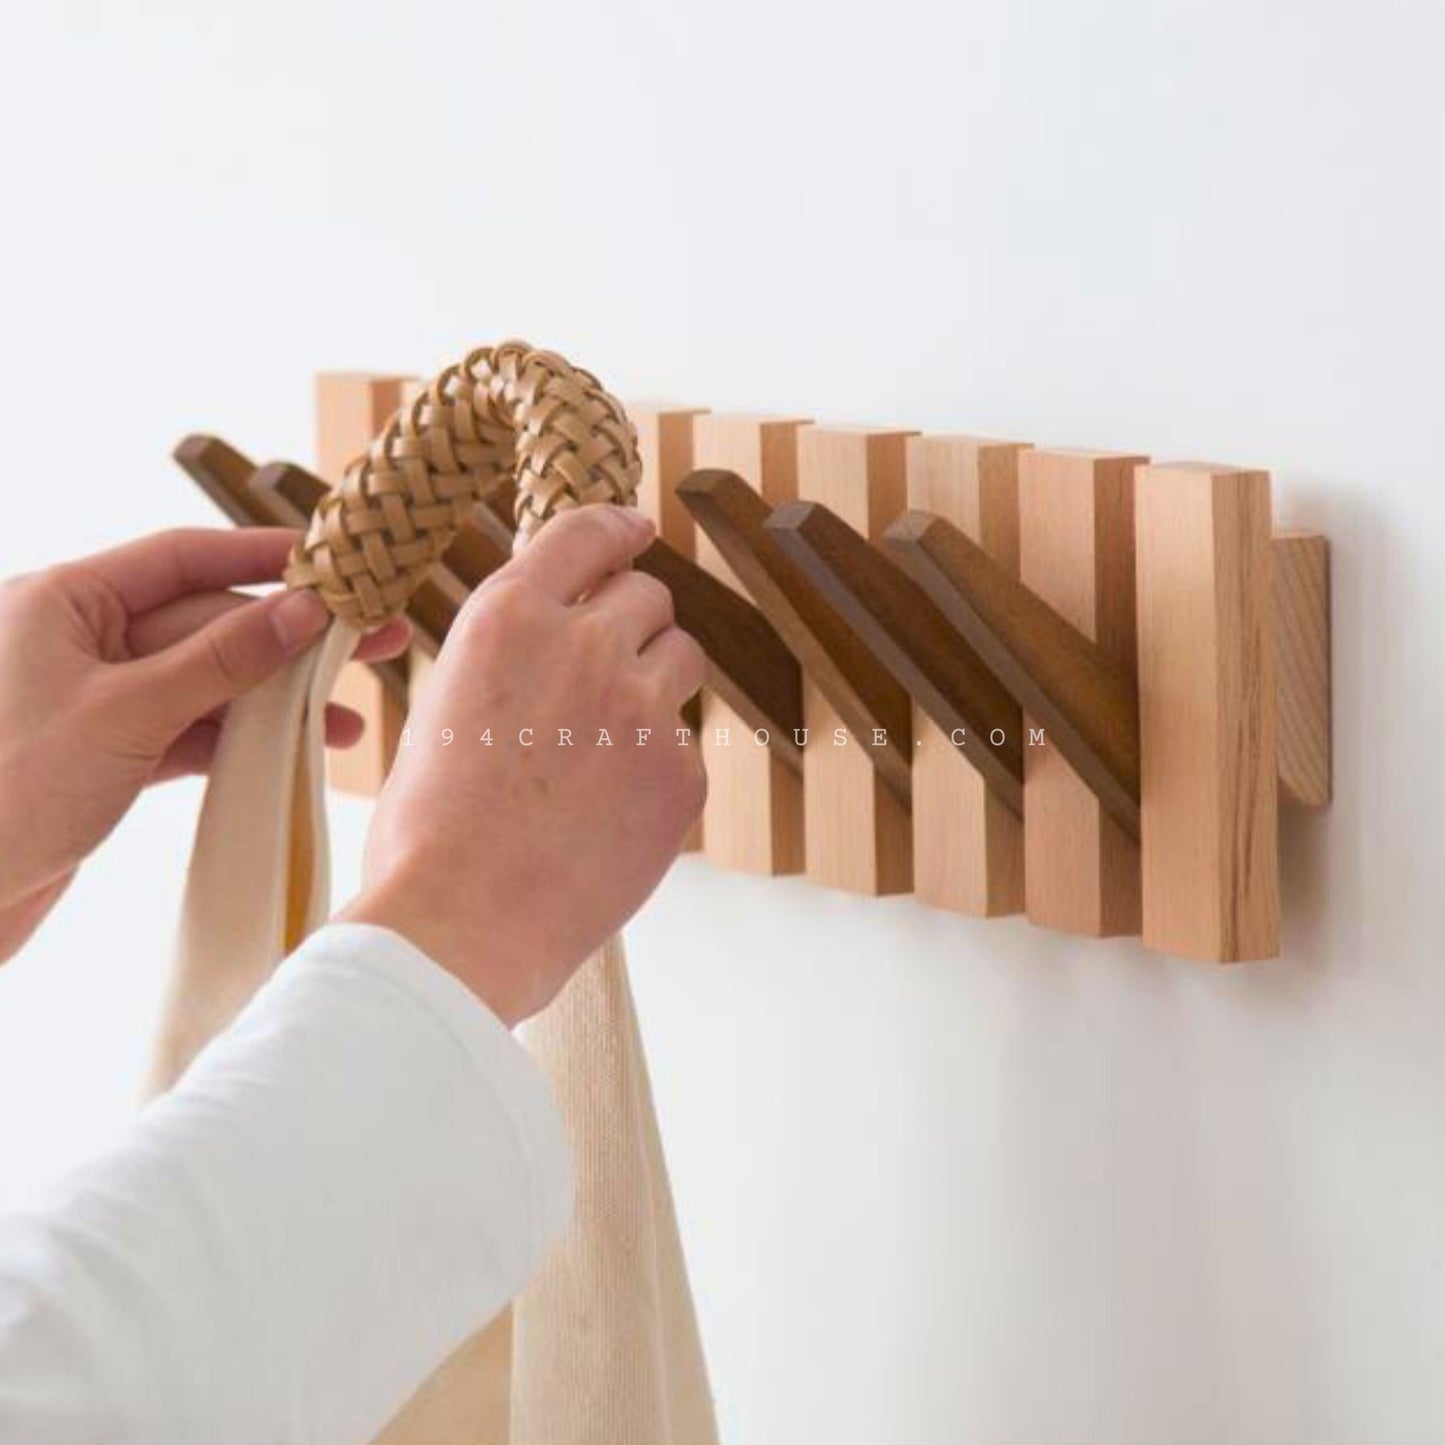 5 Hooks Wooden Piano Coat Hanger Wall Mounted | Home & Living Decor